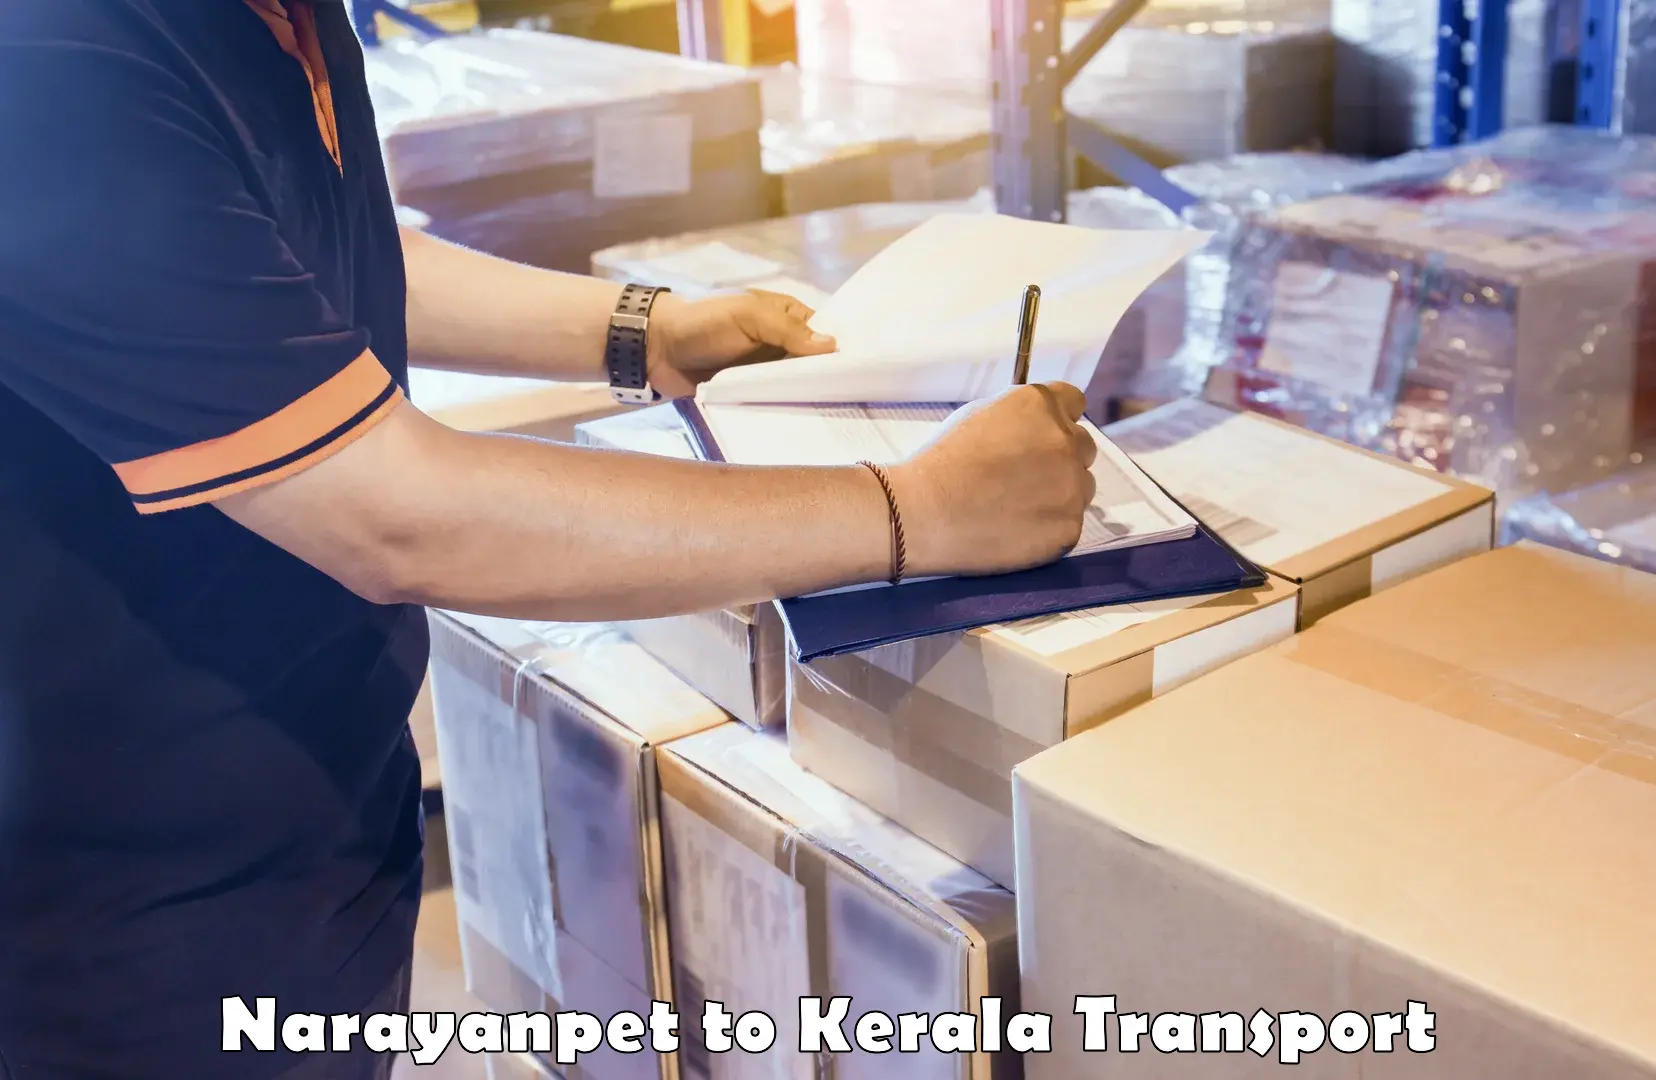 Truck transport companies in India Narayanpet to Kochi